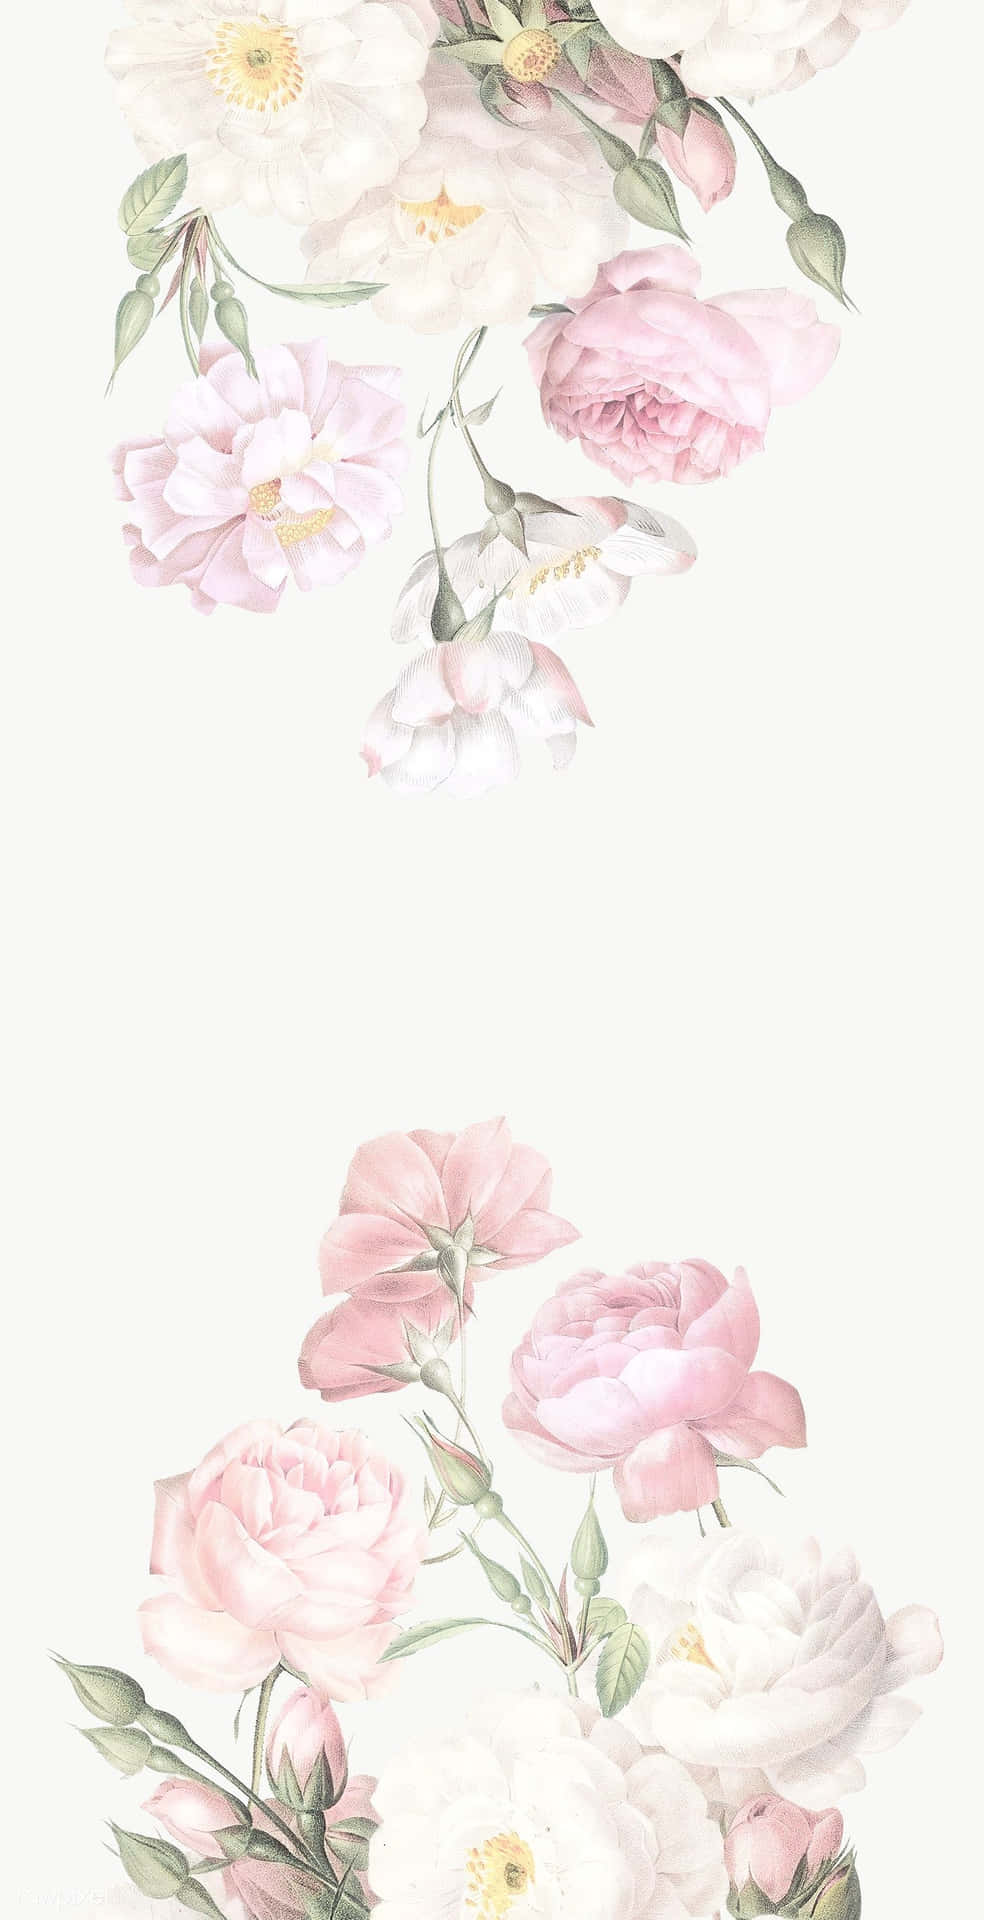 [100+] Elegant Floral Wallpapers | Wallpapers.com